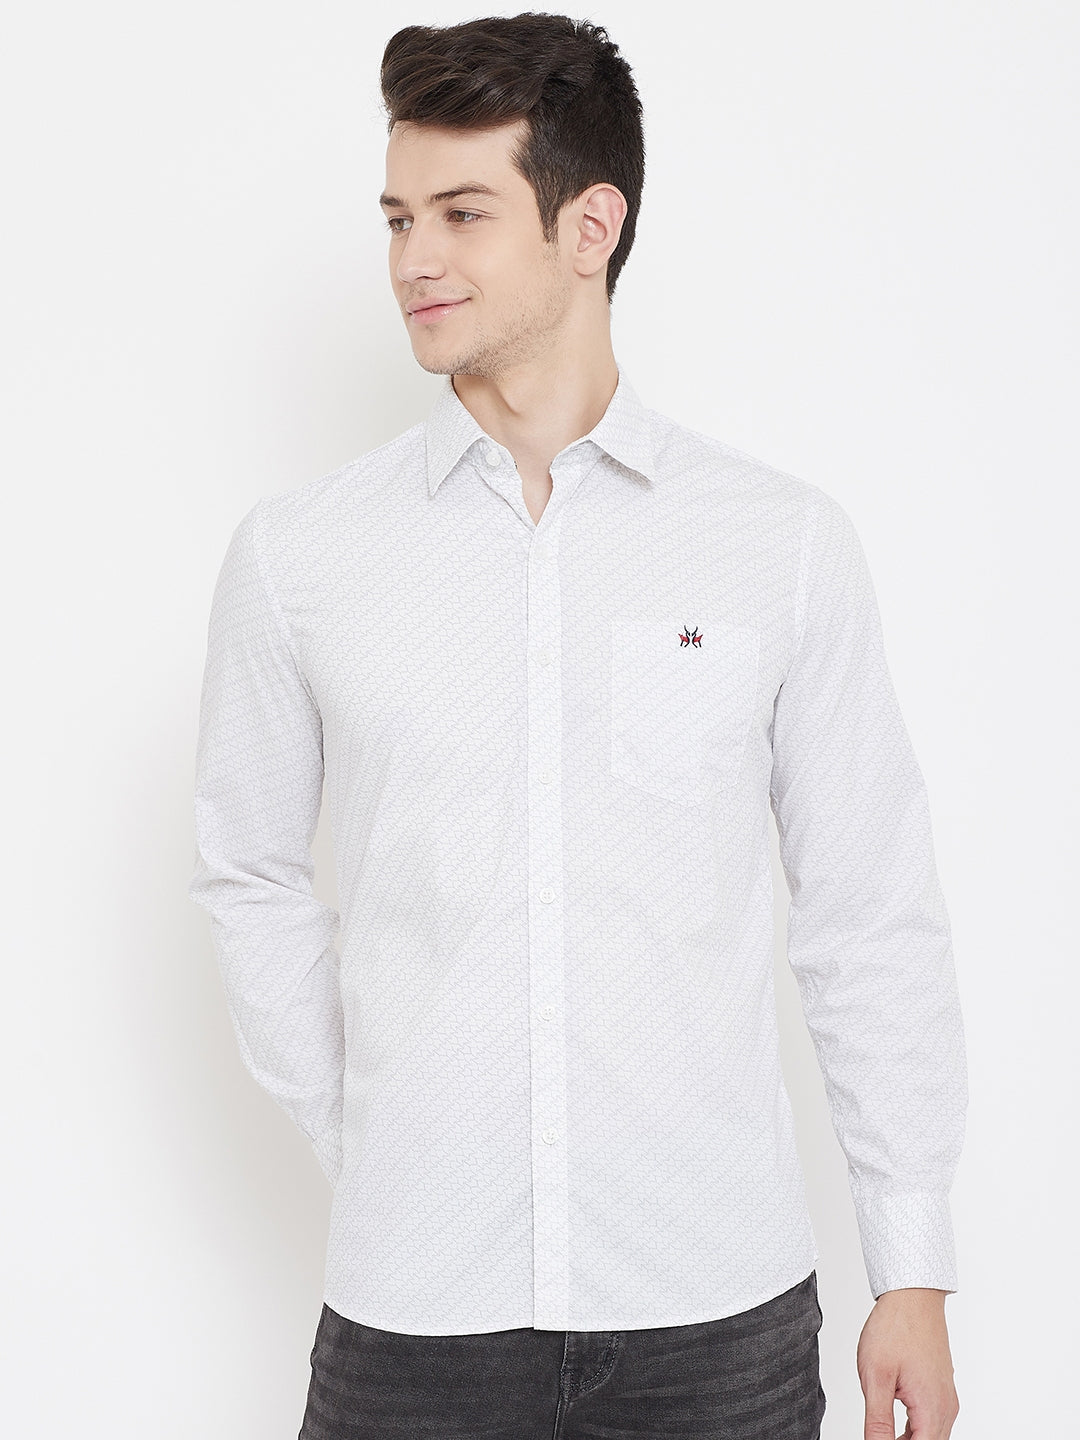 White Printed Spread Collar Slim Fit Shirt - Men Shirts